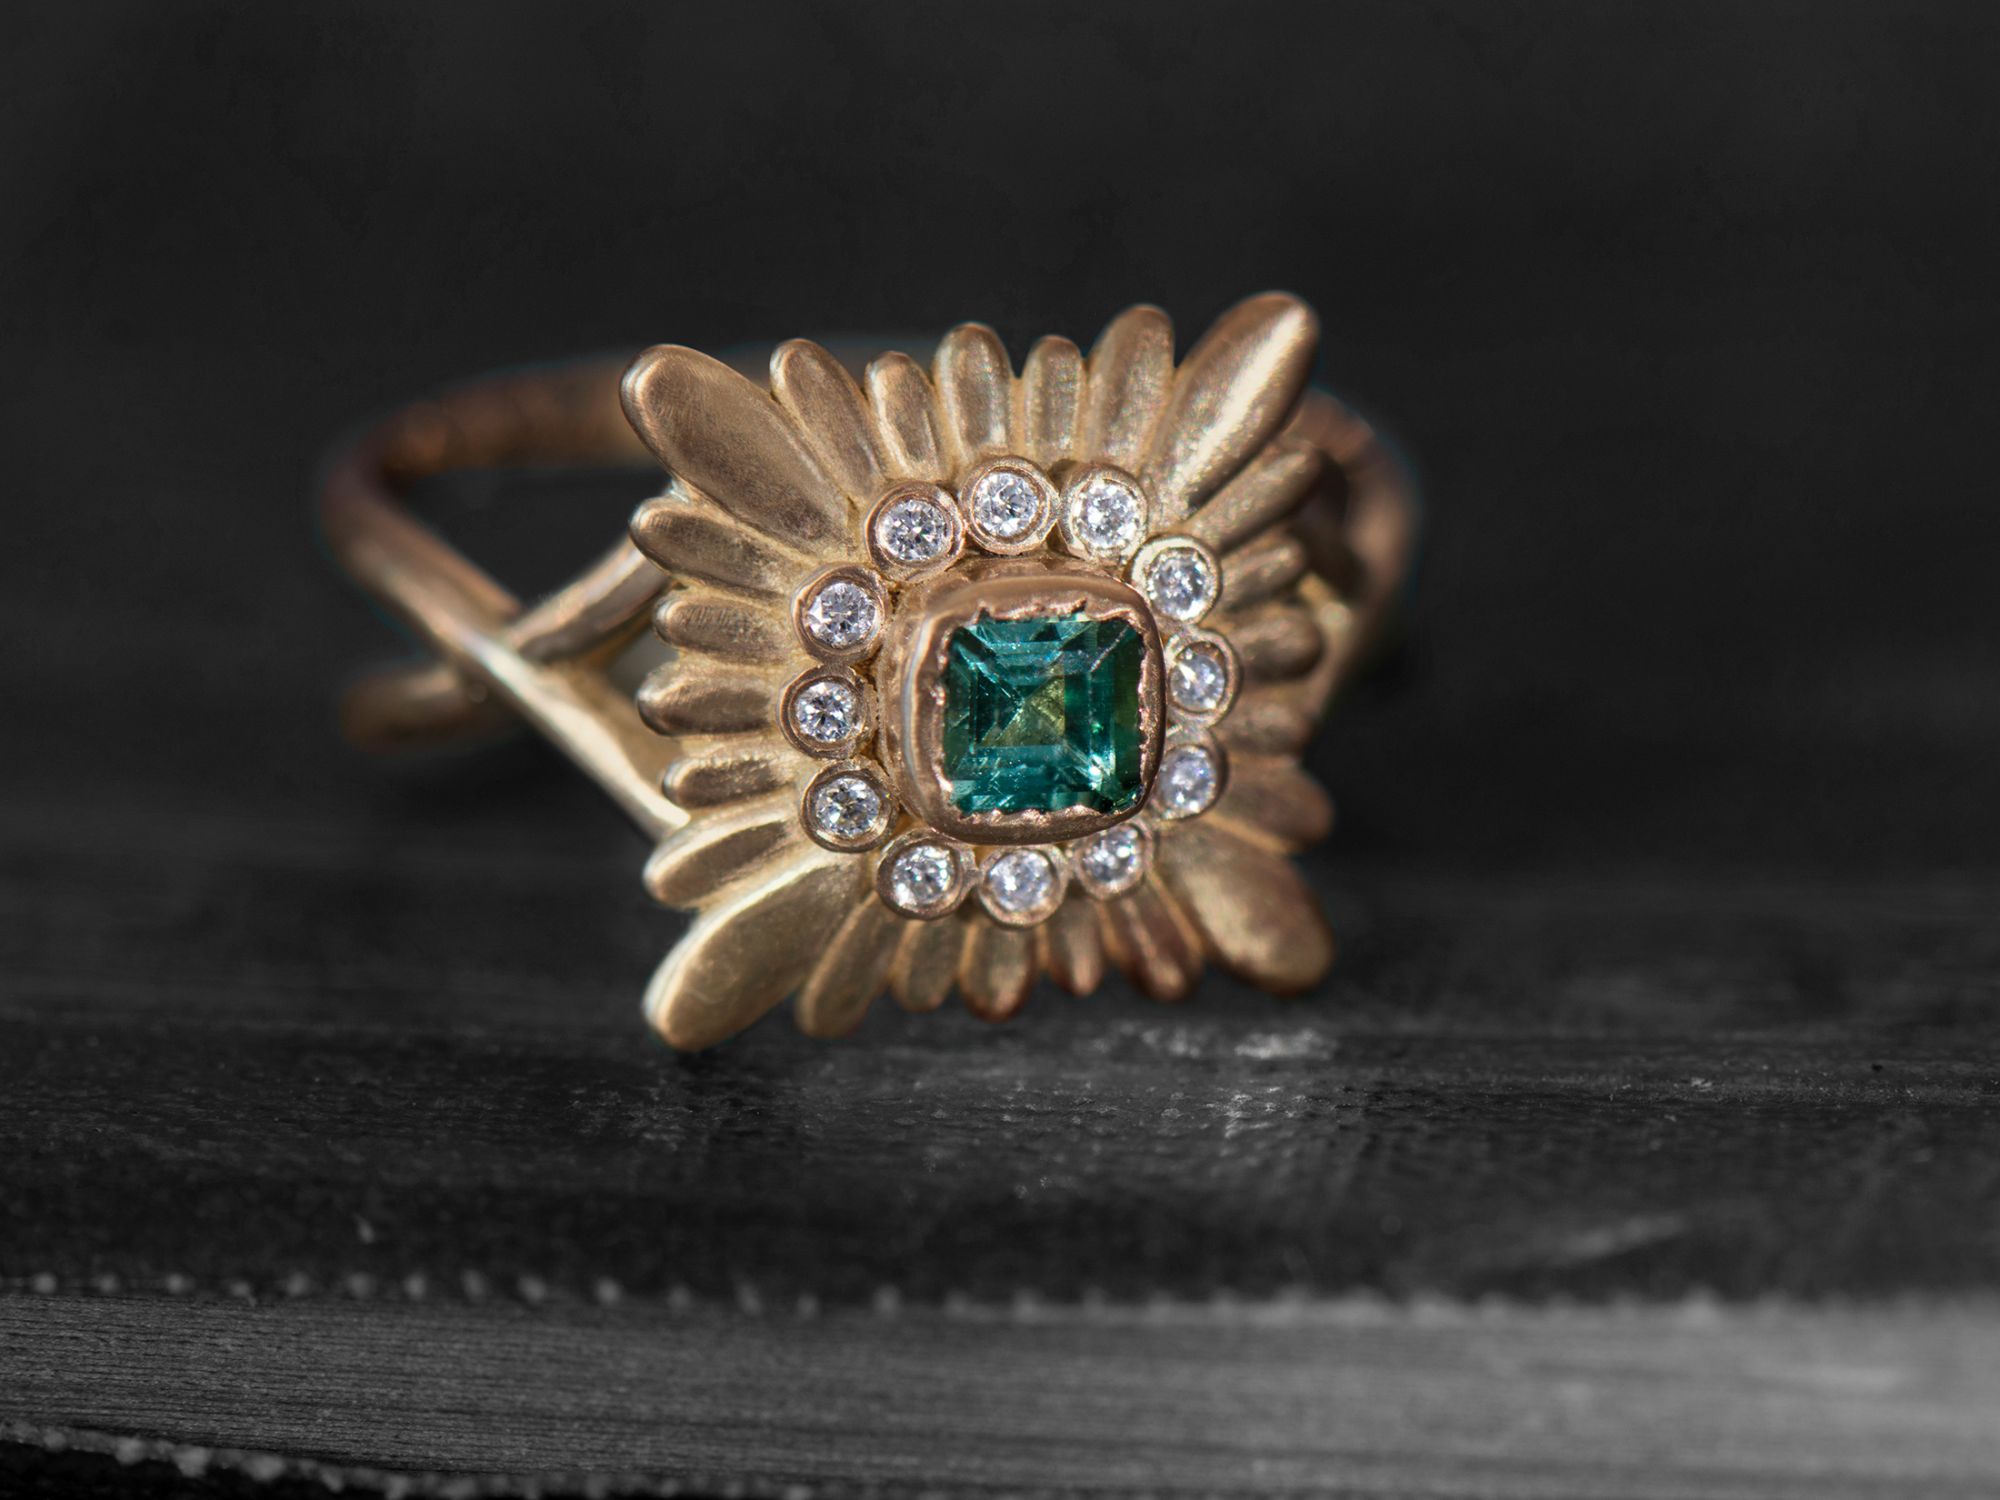 Mila green Tourmaline and diamonds ring by Emmanuelle Zysman